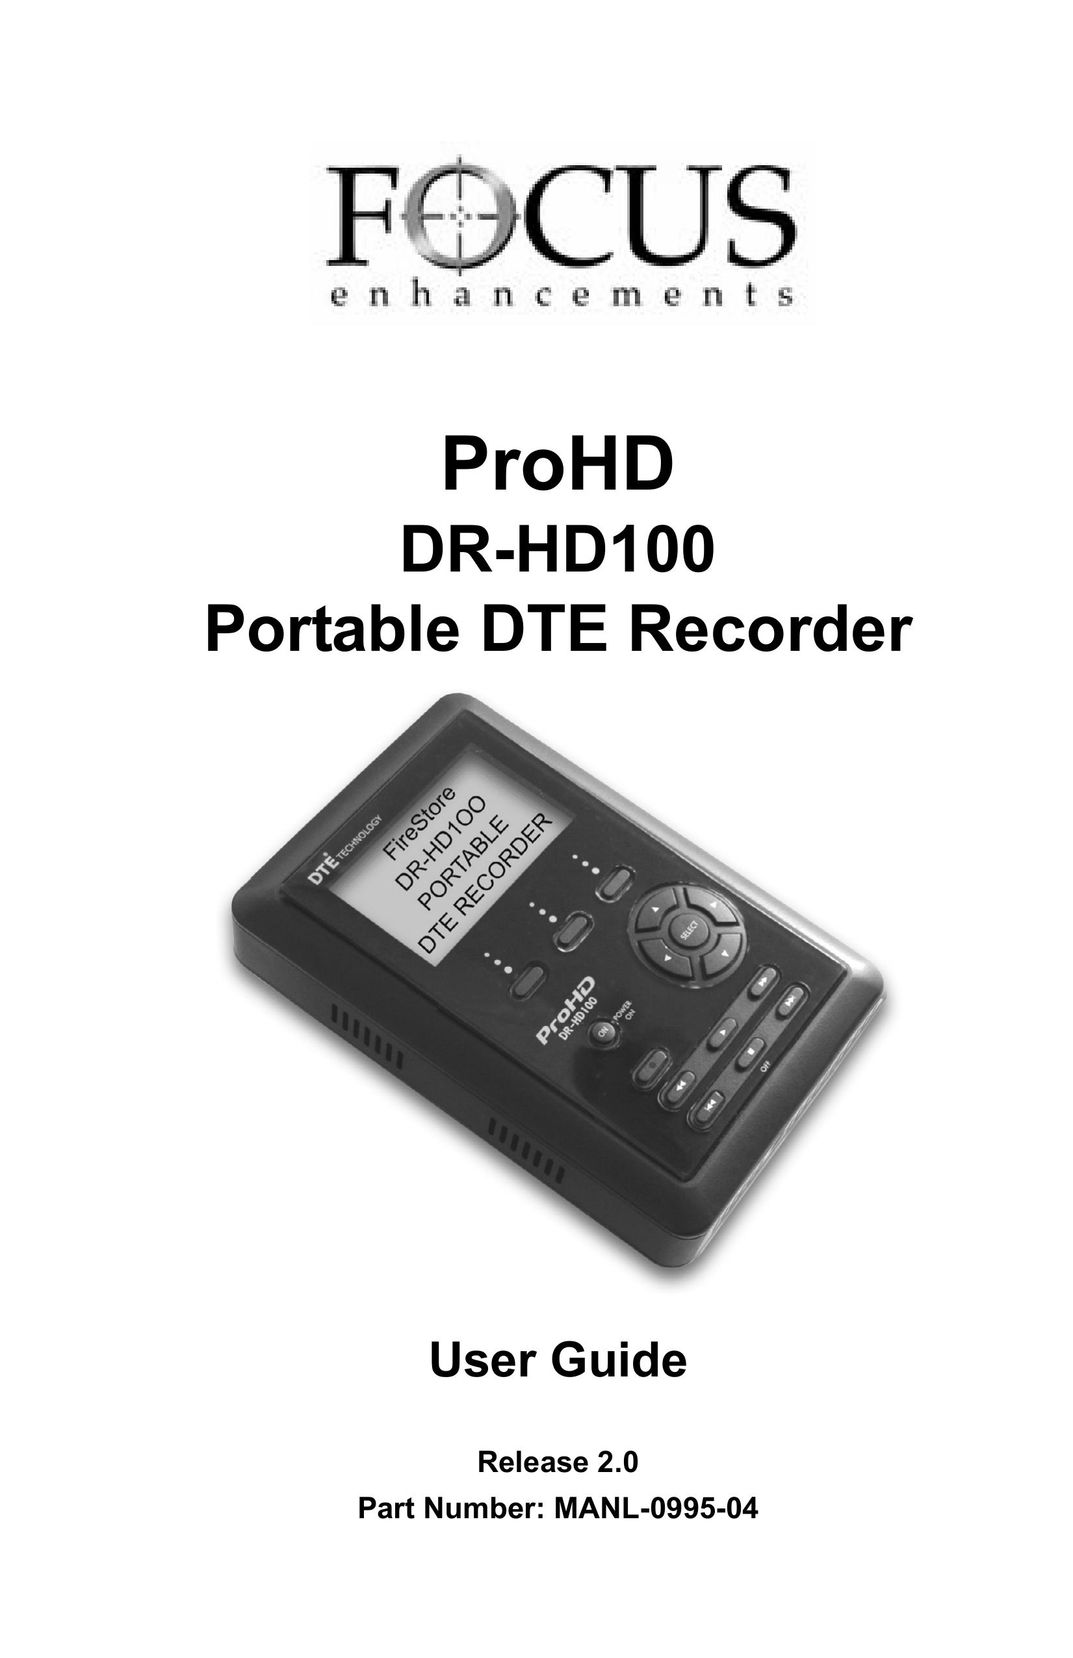 FOCUS Enhancements DR-HD100 DVD Recorder User Manual